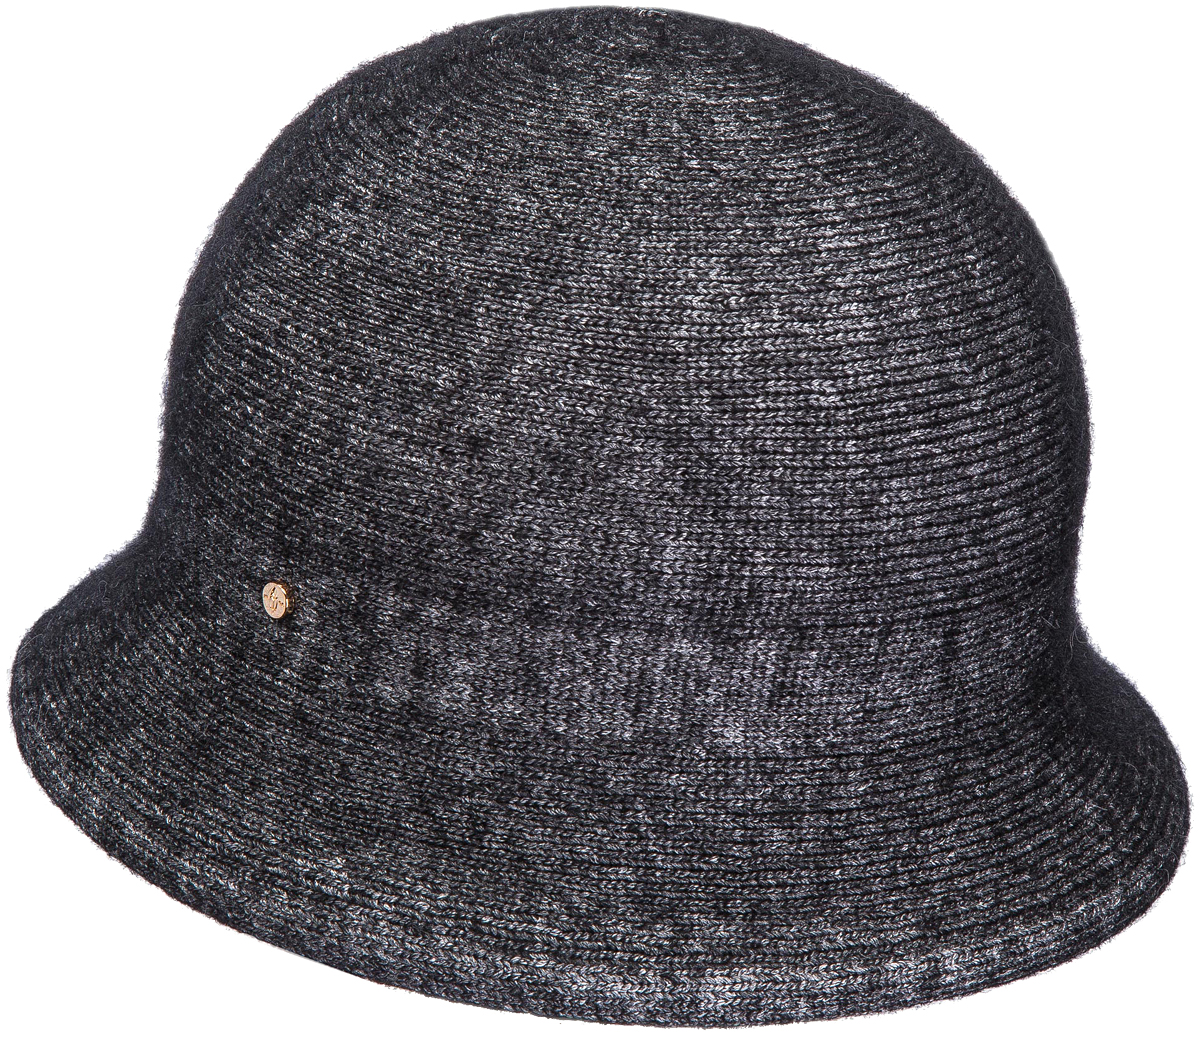 Шляпа женская Canoe Dolli, цвет: черный. 3446781. Размер 56/58